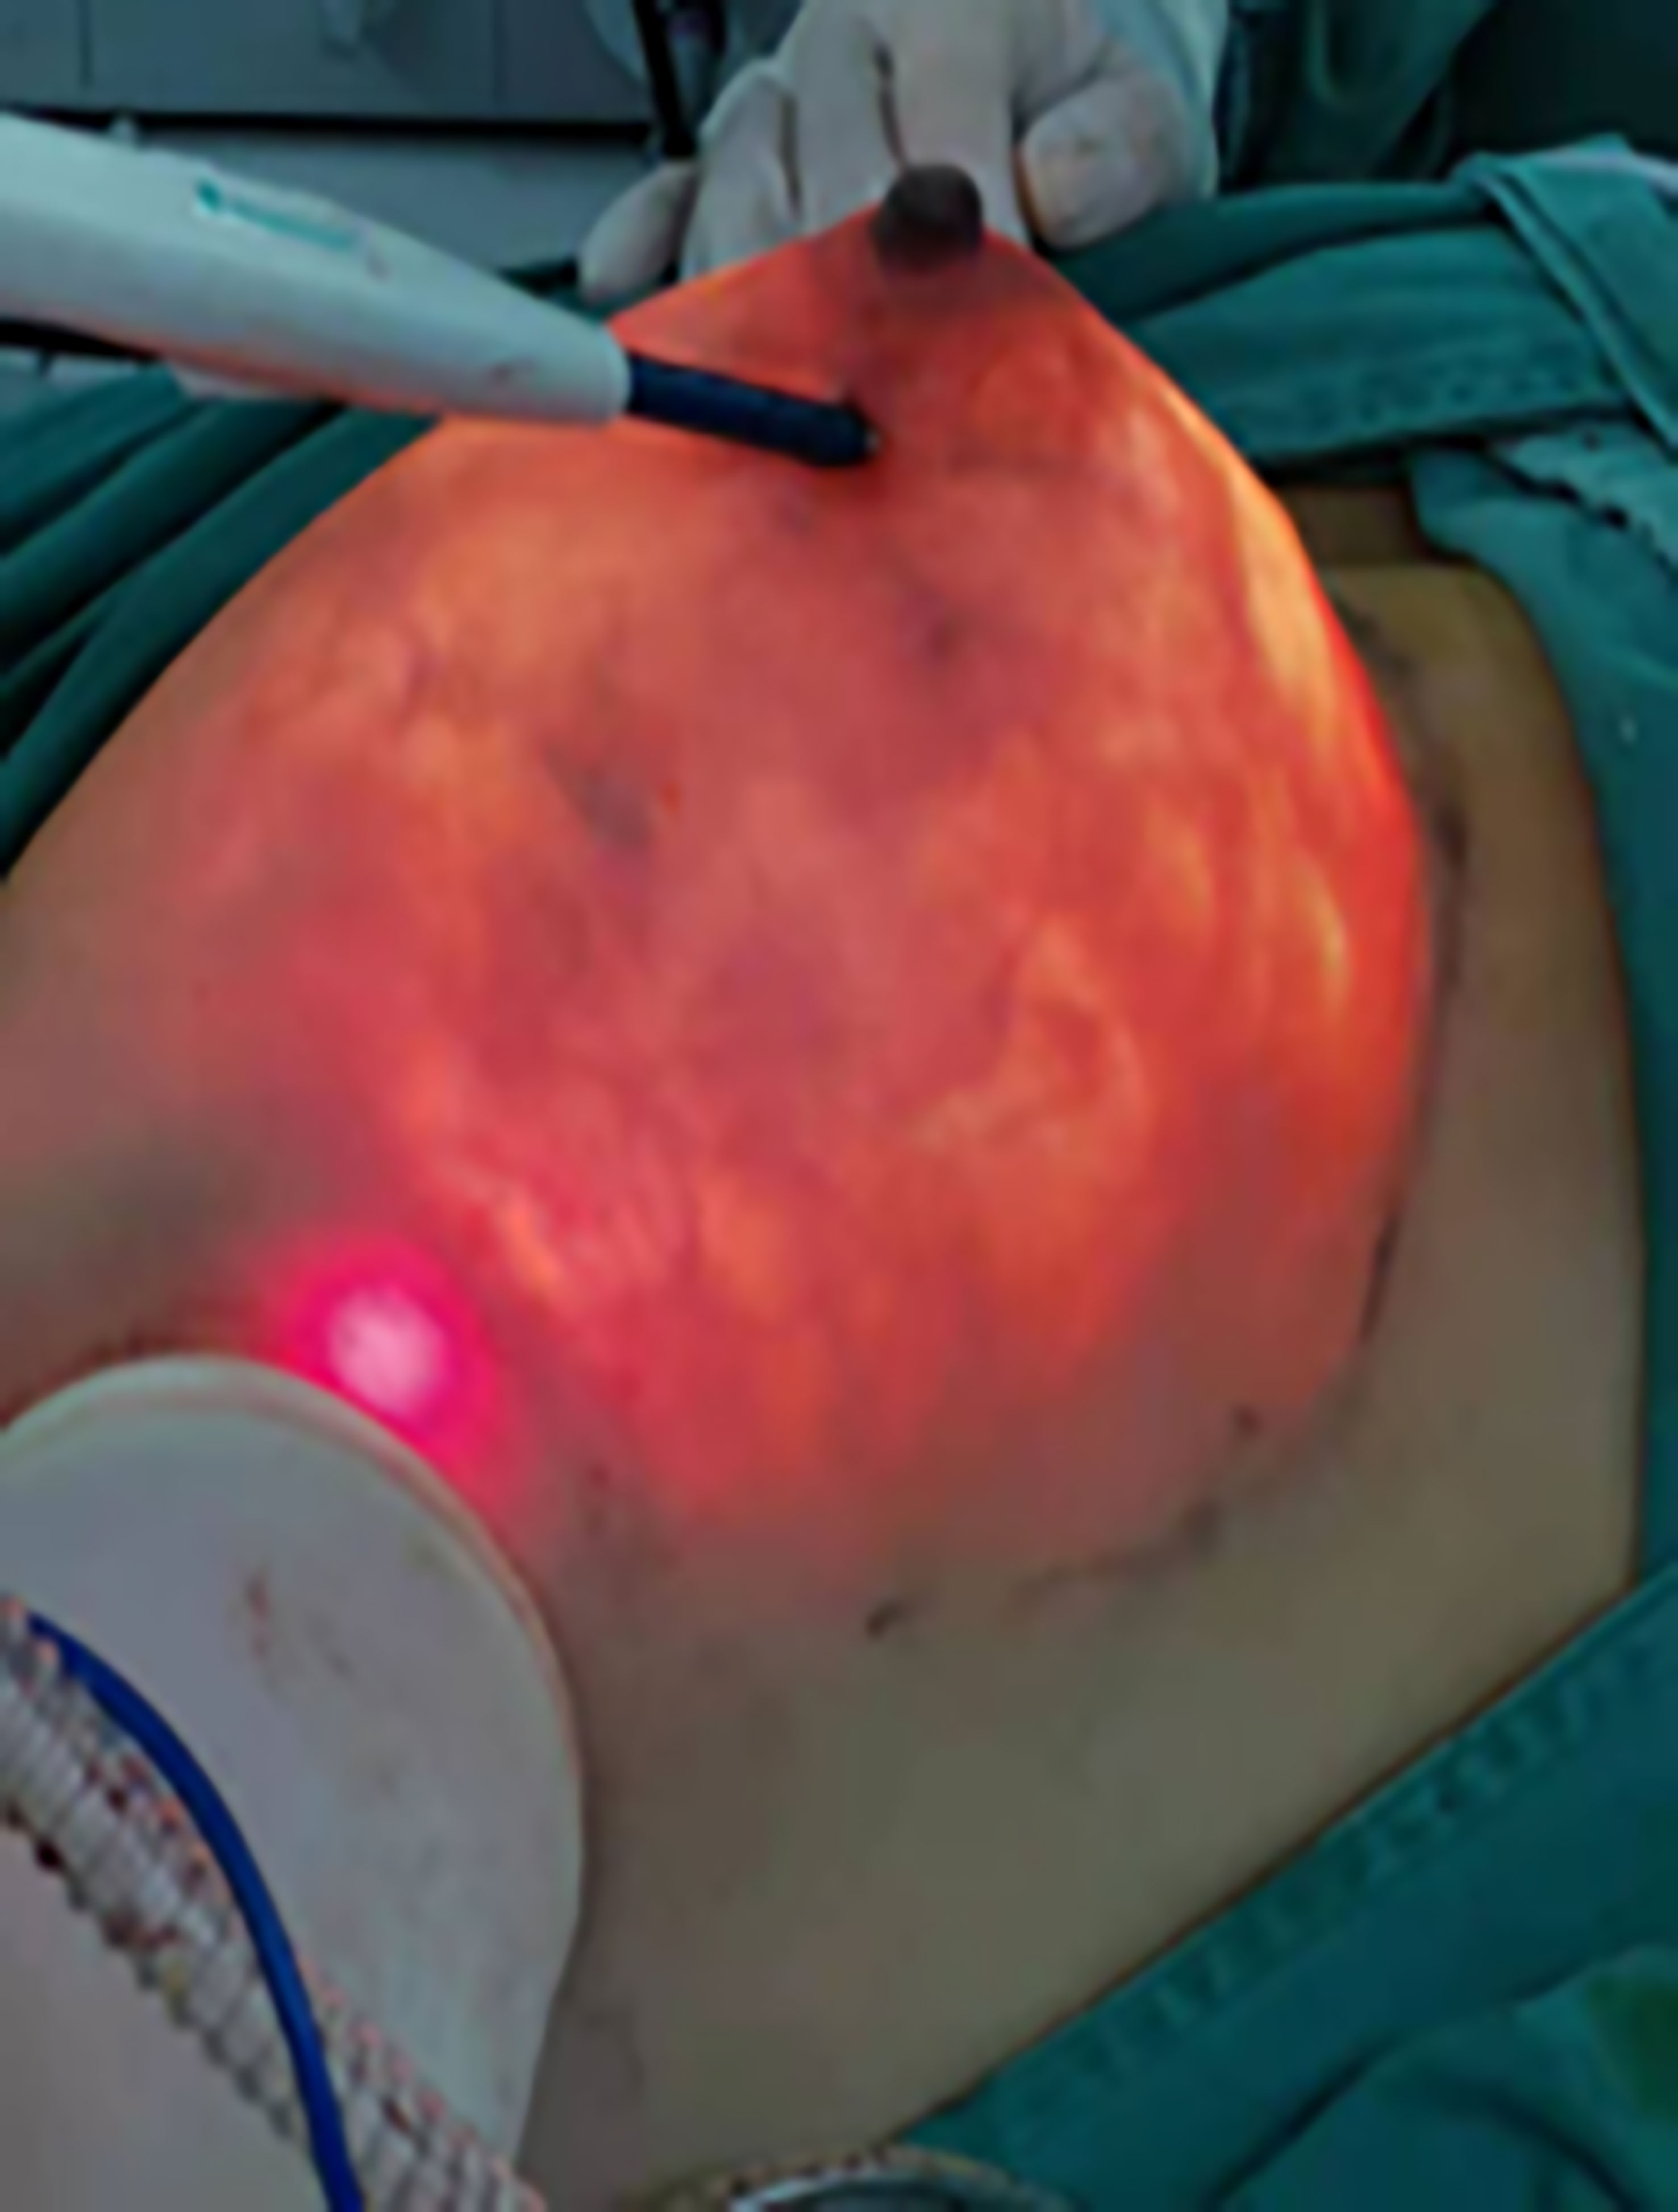 Endoscopic nipple sparing mastectomy with immediate implant-based